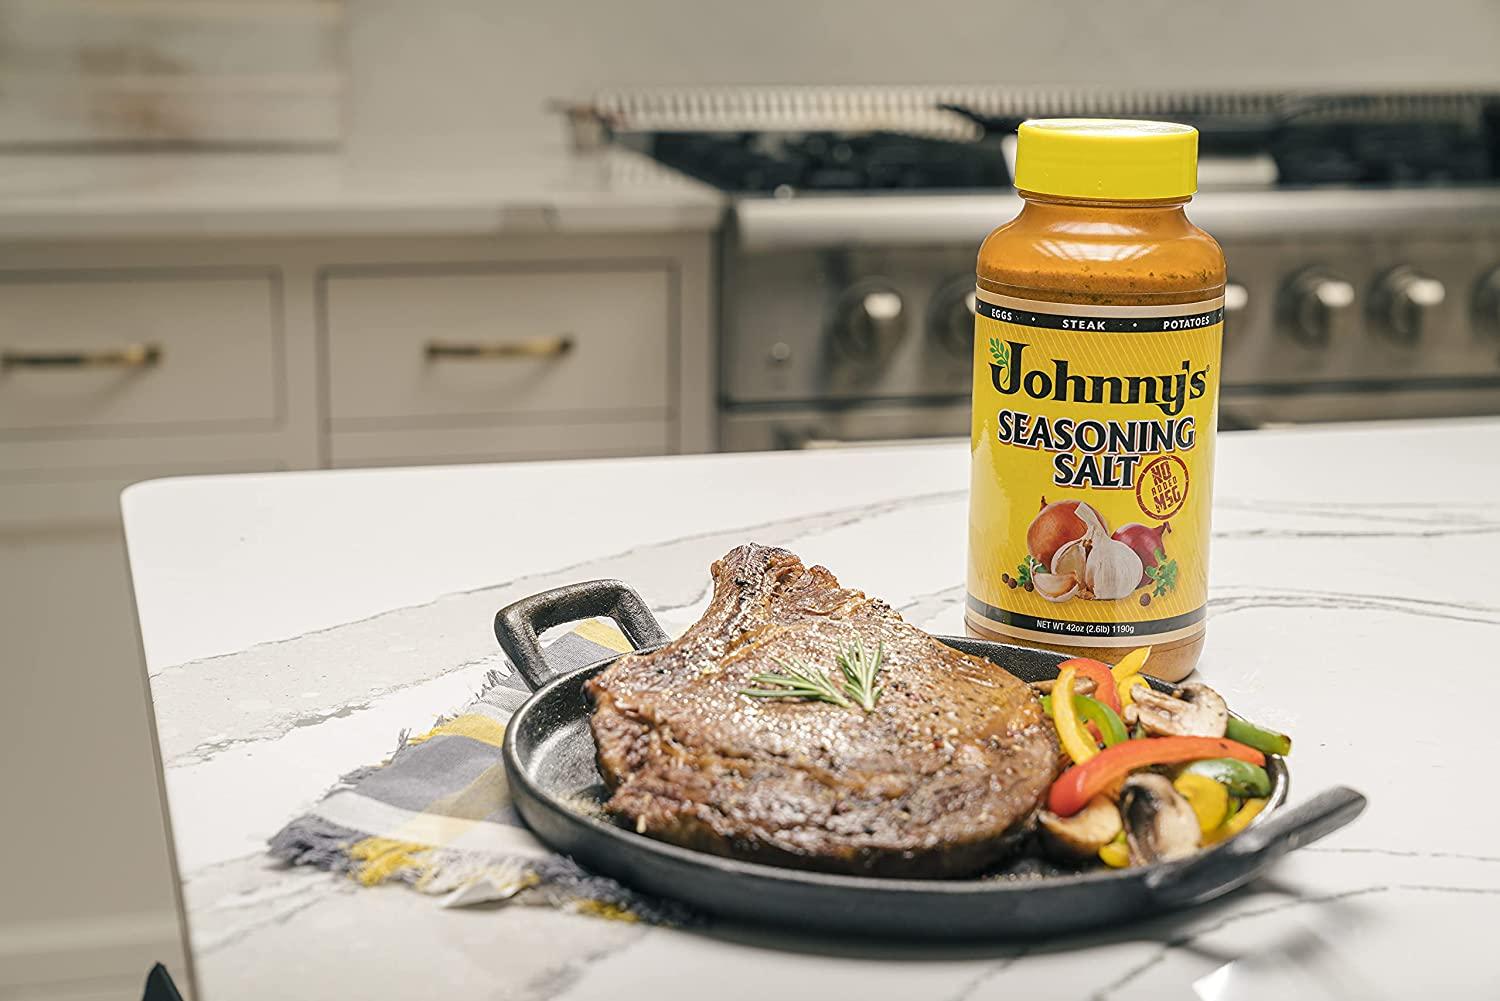  Johnny's Seasoning Salt, No Msg, 42 Oz : Grocery & Gourmet Food